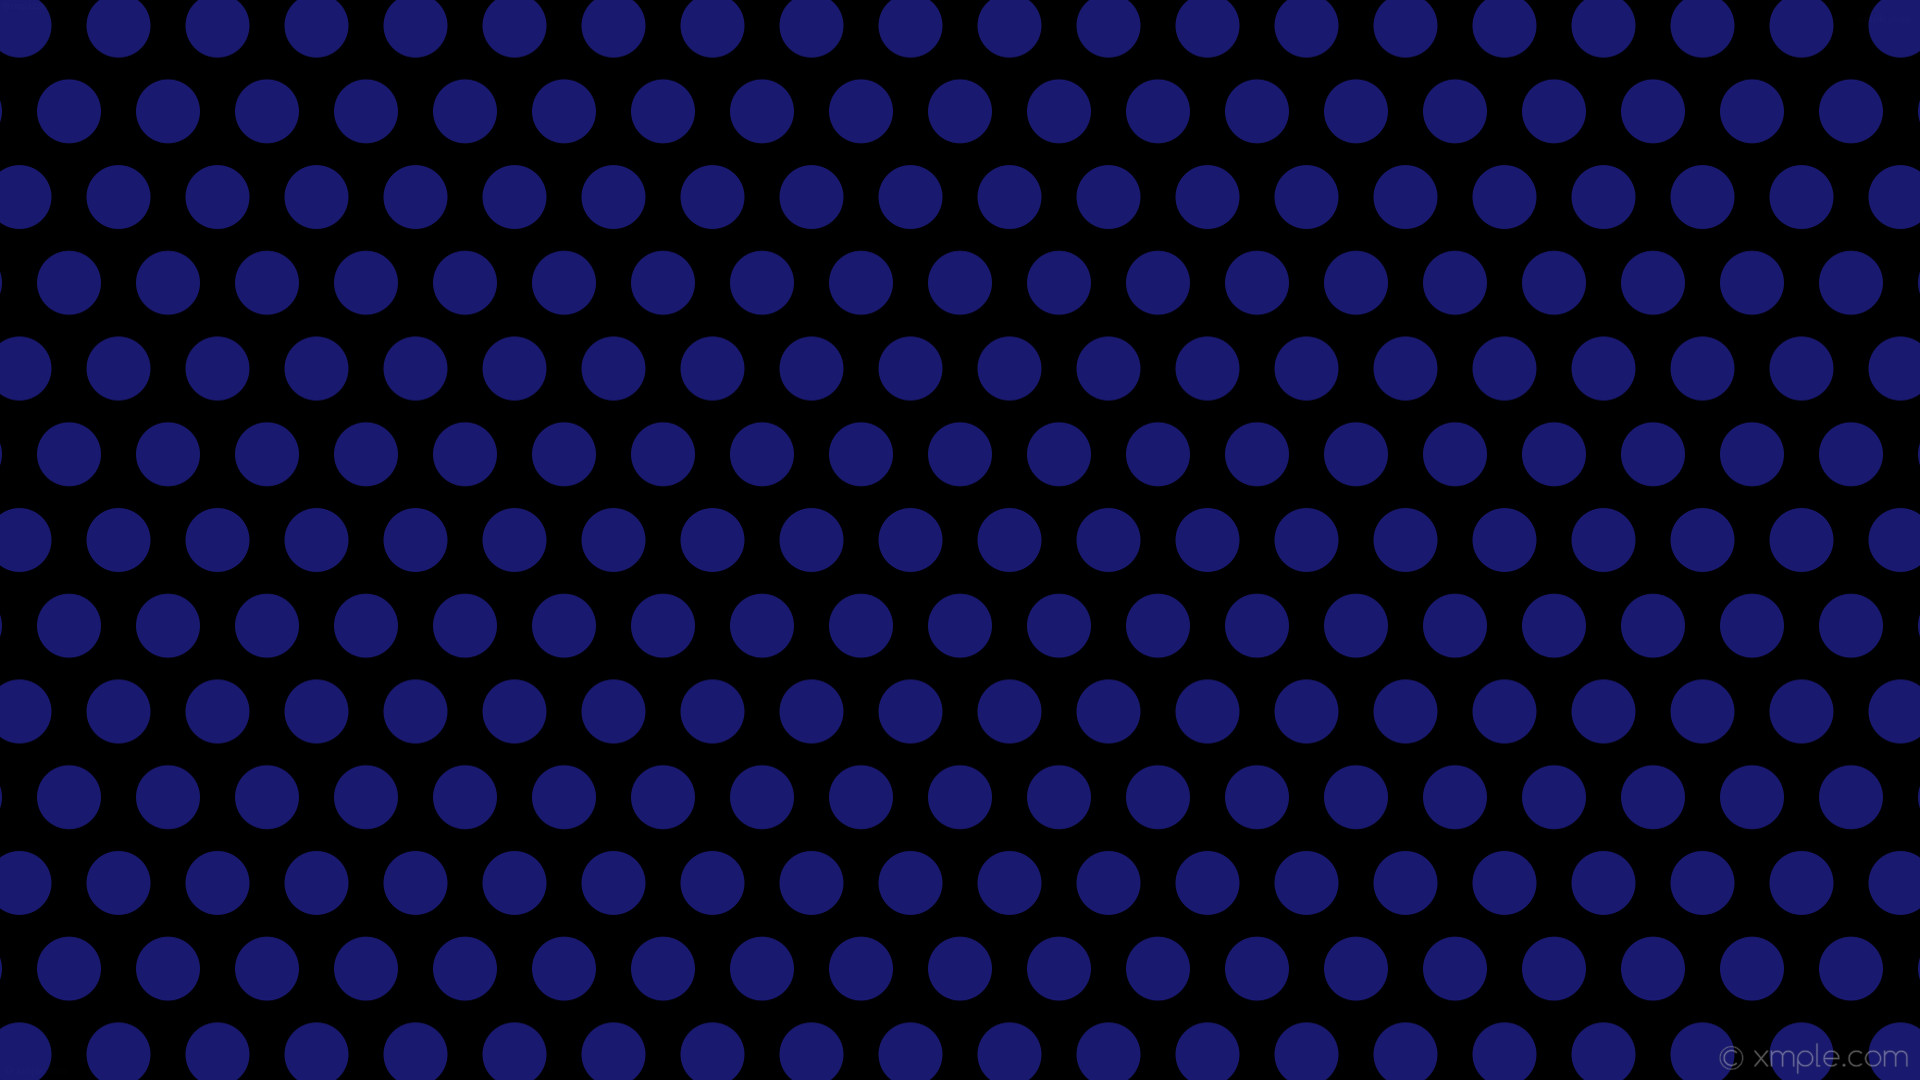 1920x1080 wallpaper dots black hexagon blue polka midnight blue #000000 #191970 0Â°  64px 99px